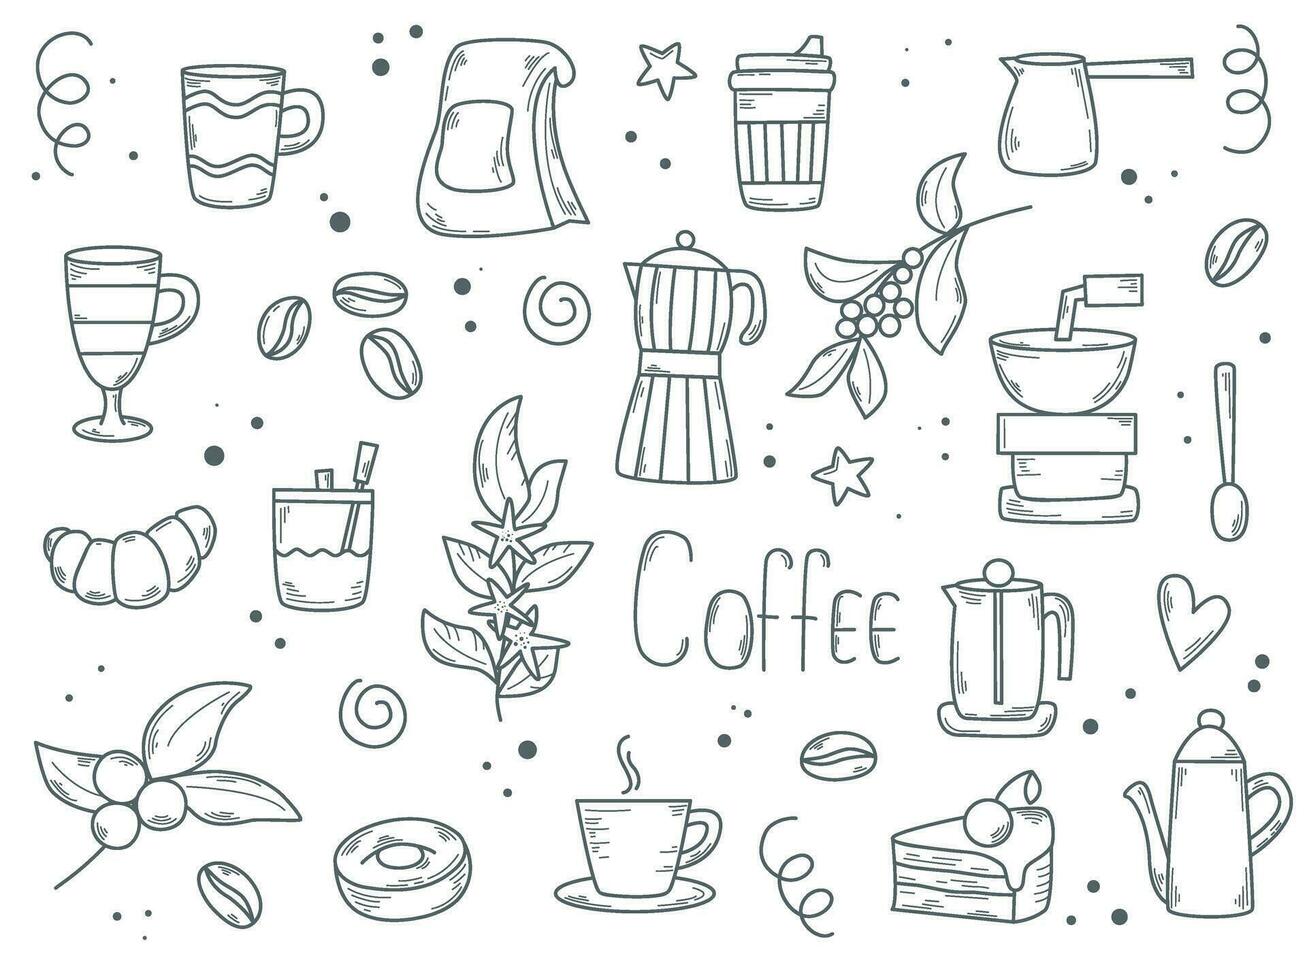 Coffee doodle sketch style set vector